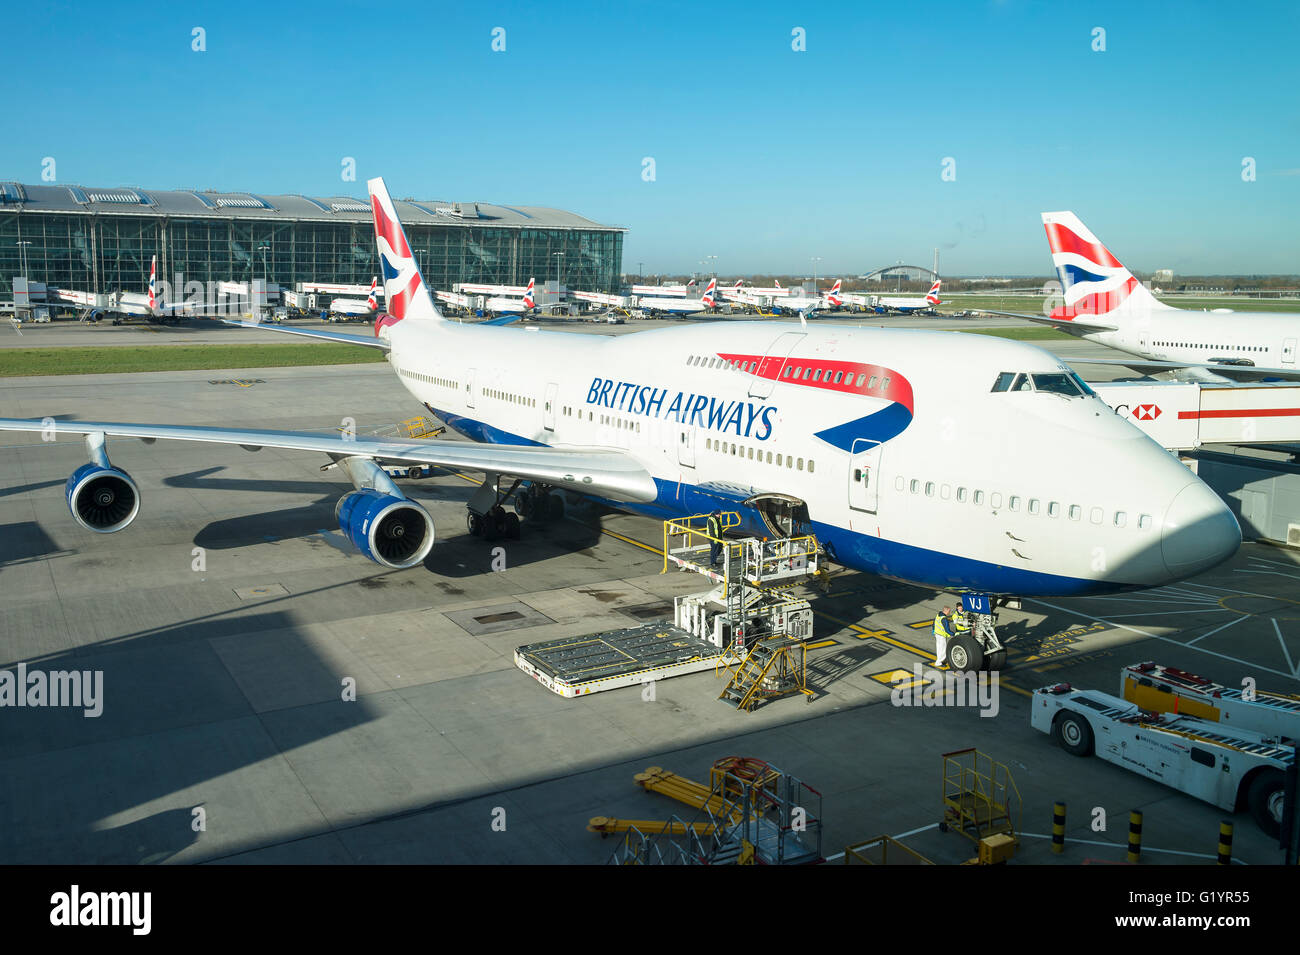 LONDON - JANUARY 28, 2016: British Airways passenger planes stand ready ...